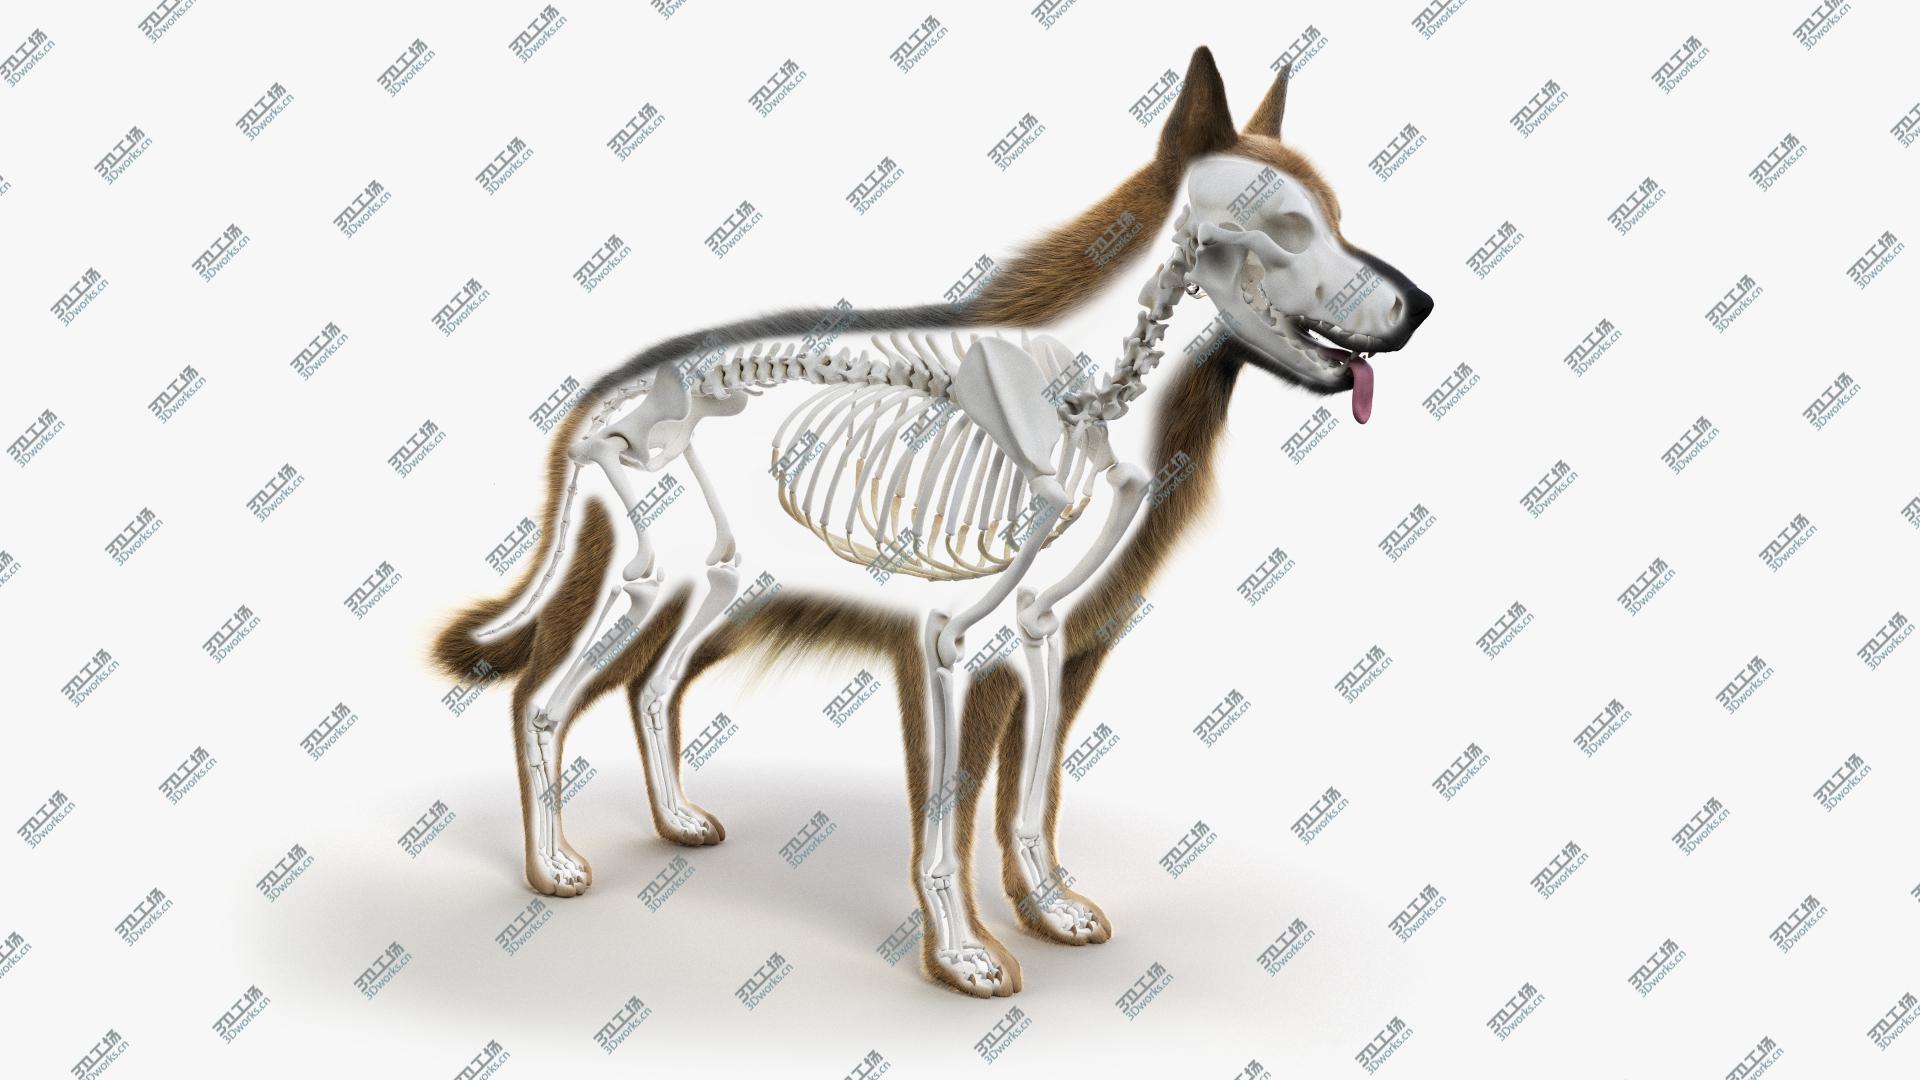 images/goods_img/202105071/Dog Skin And Skeleton Animated model/2.jpg